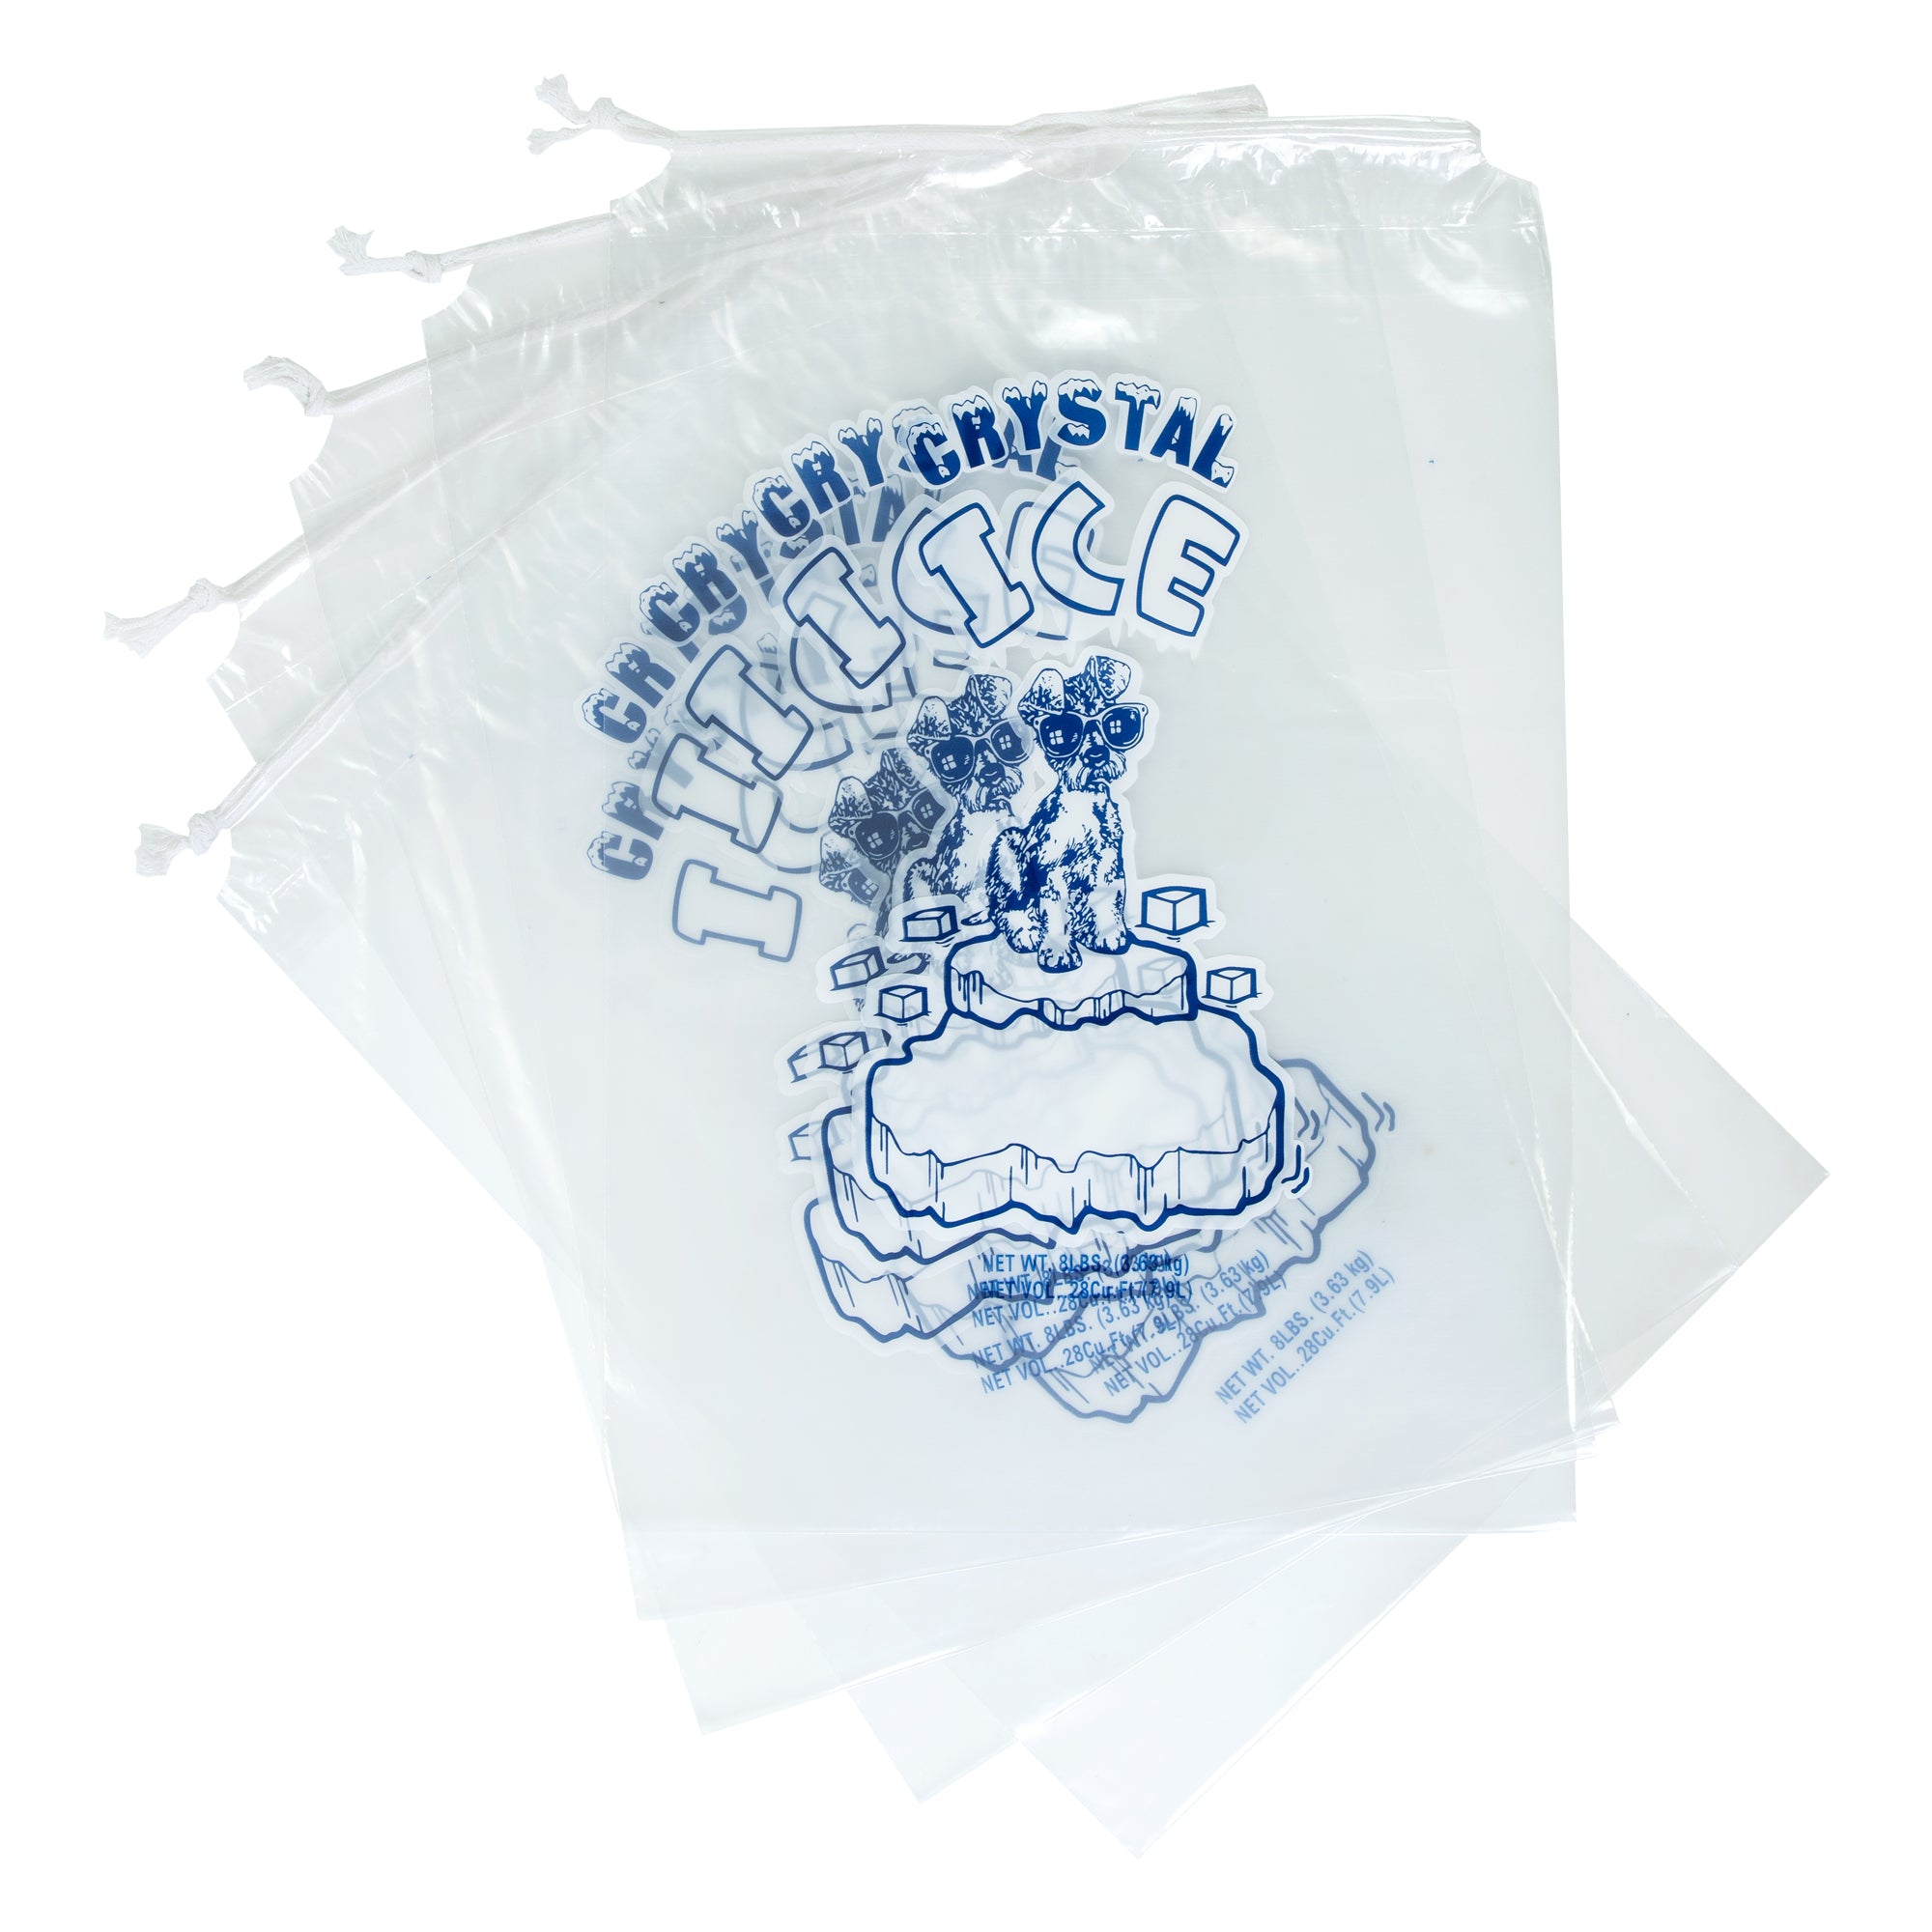 8 lb ice bag with cotton drawstring in bulk